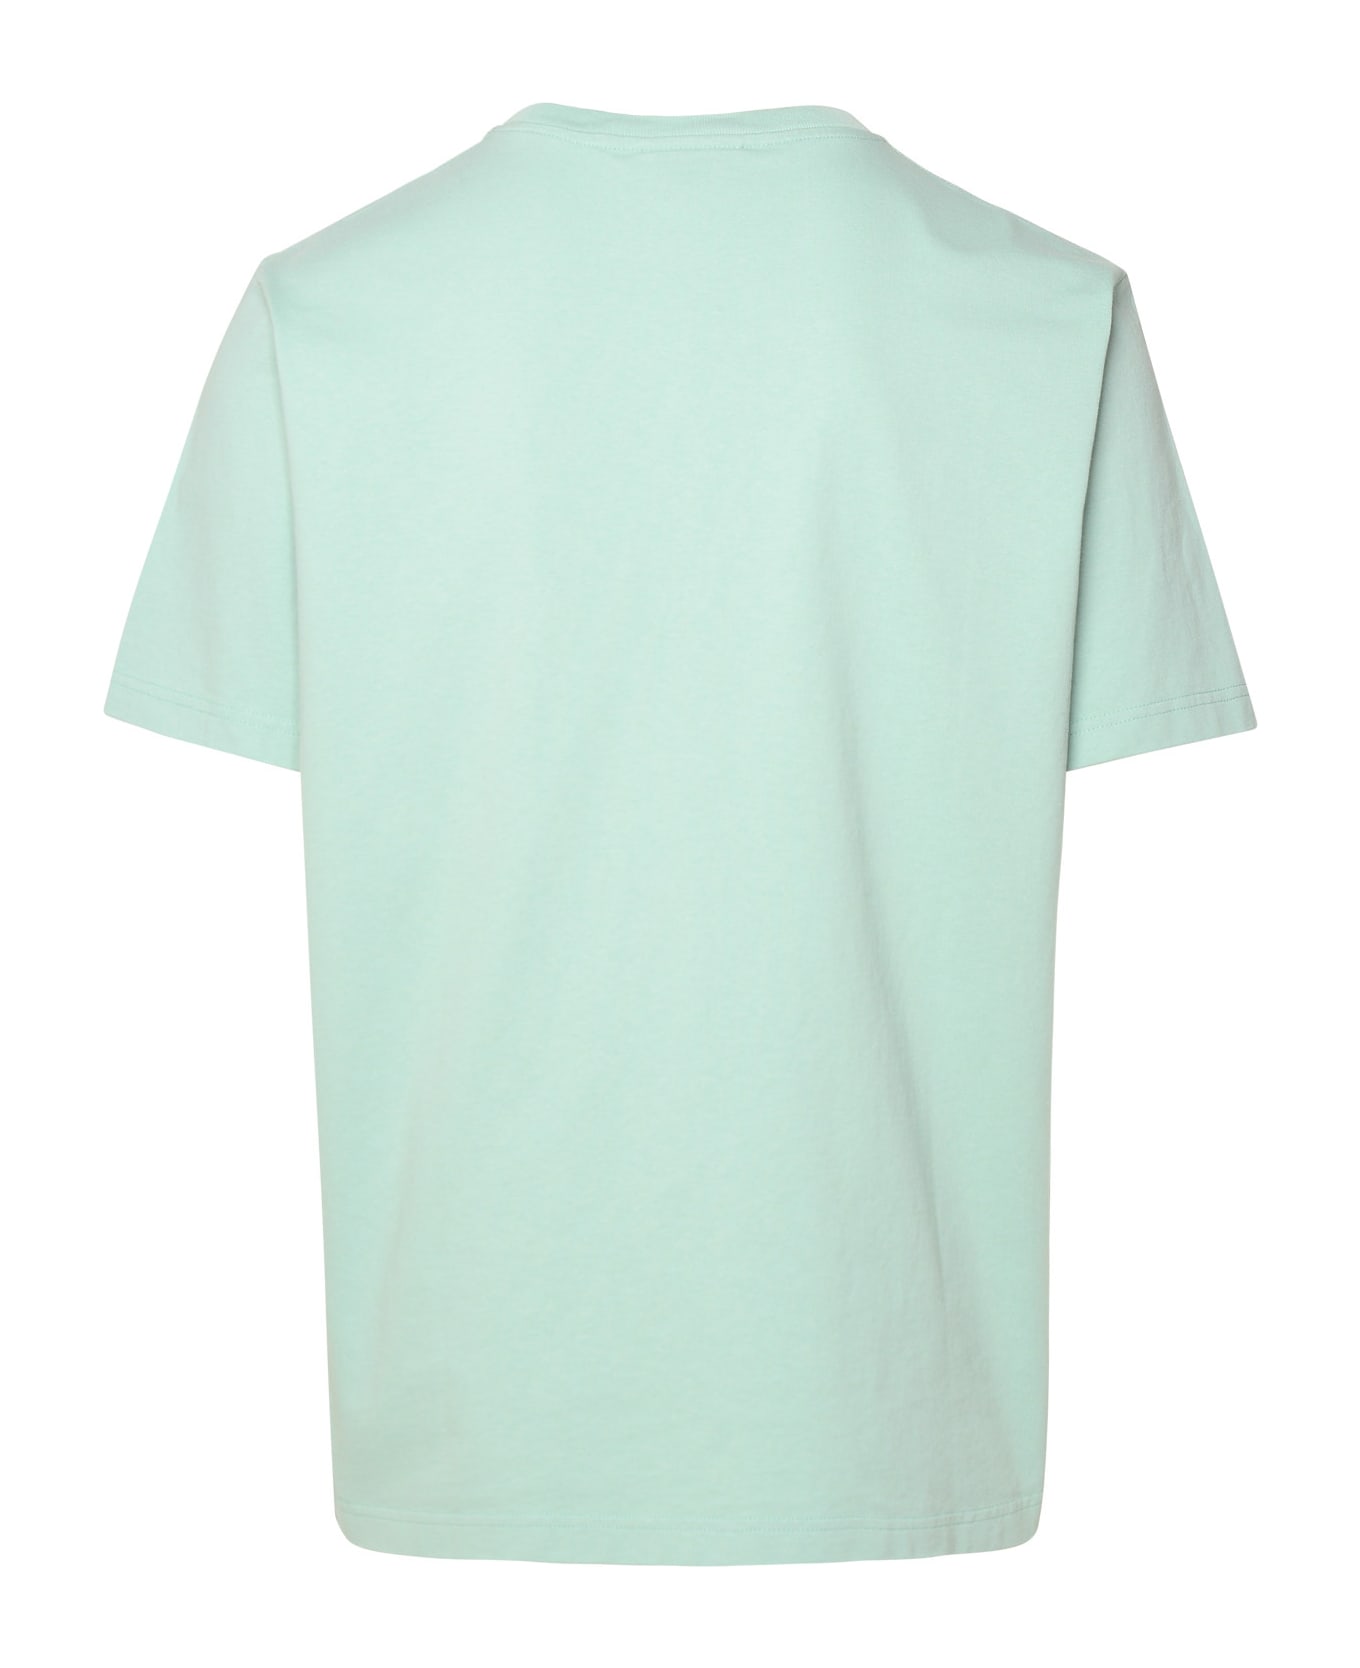 Maison Kitsuné Pastel Turquoise Cotton T-shirt - Light Blue シャツ